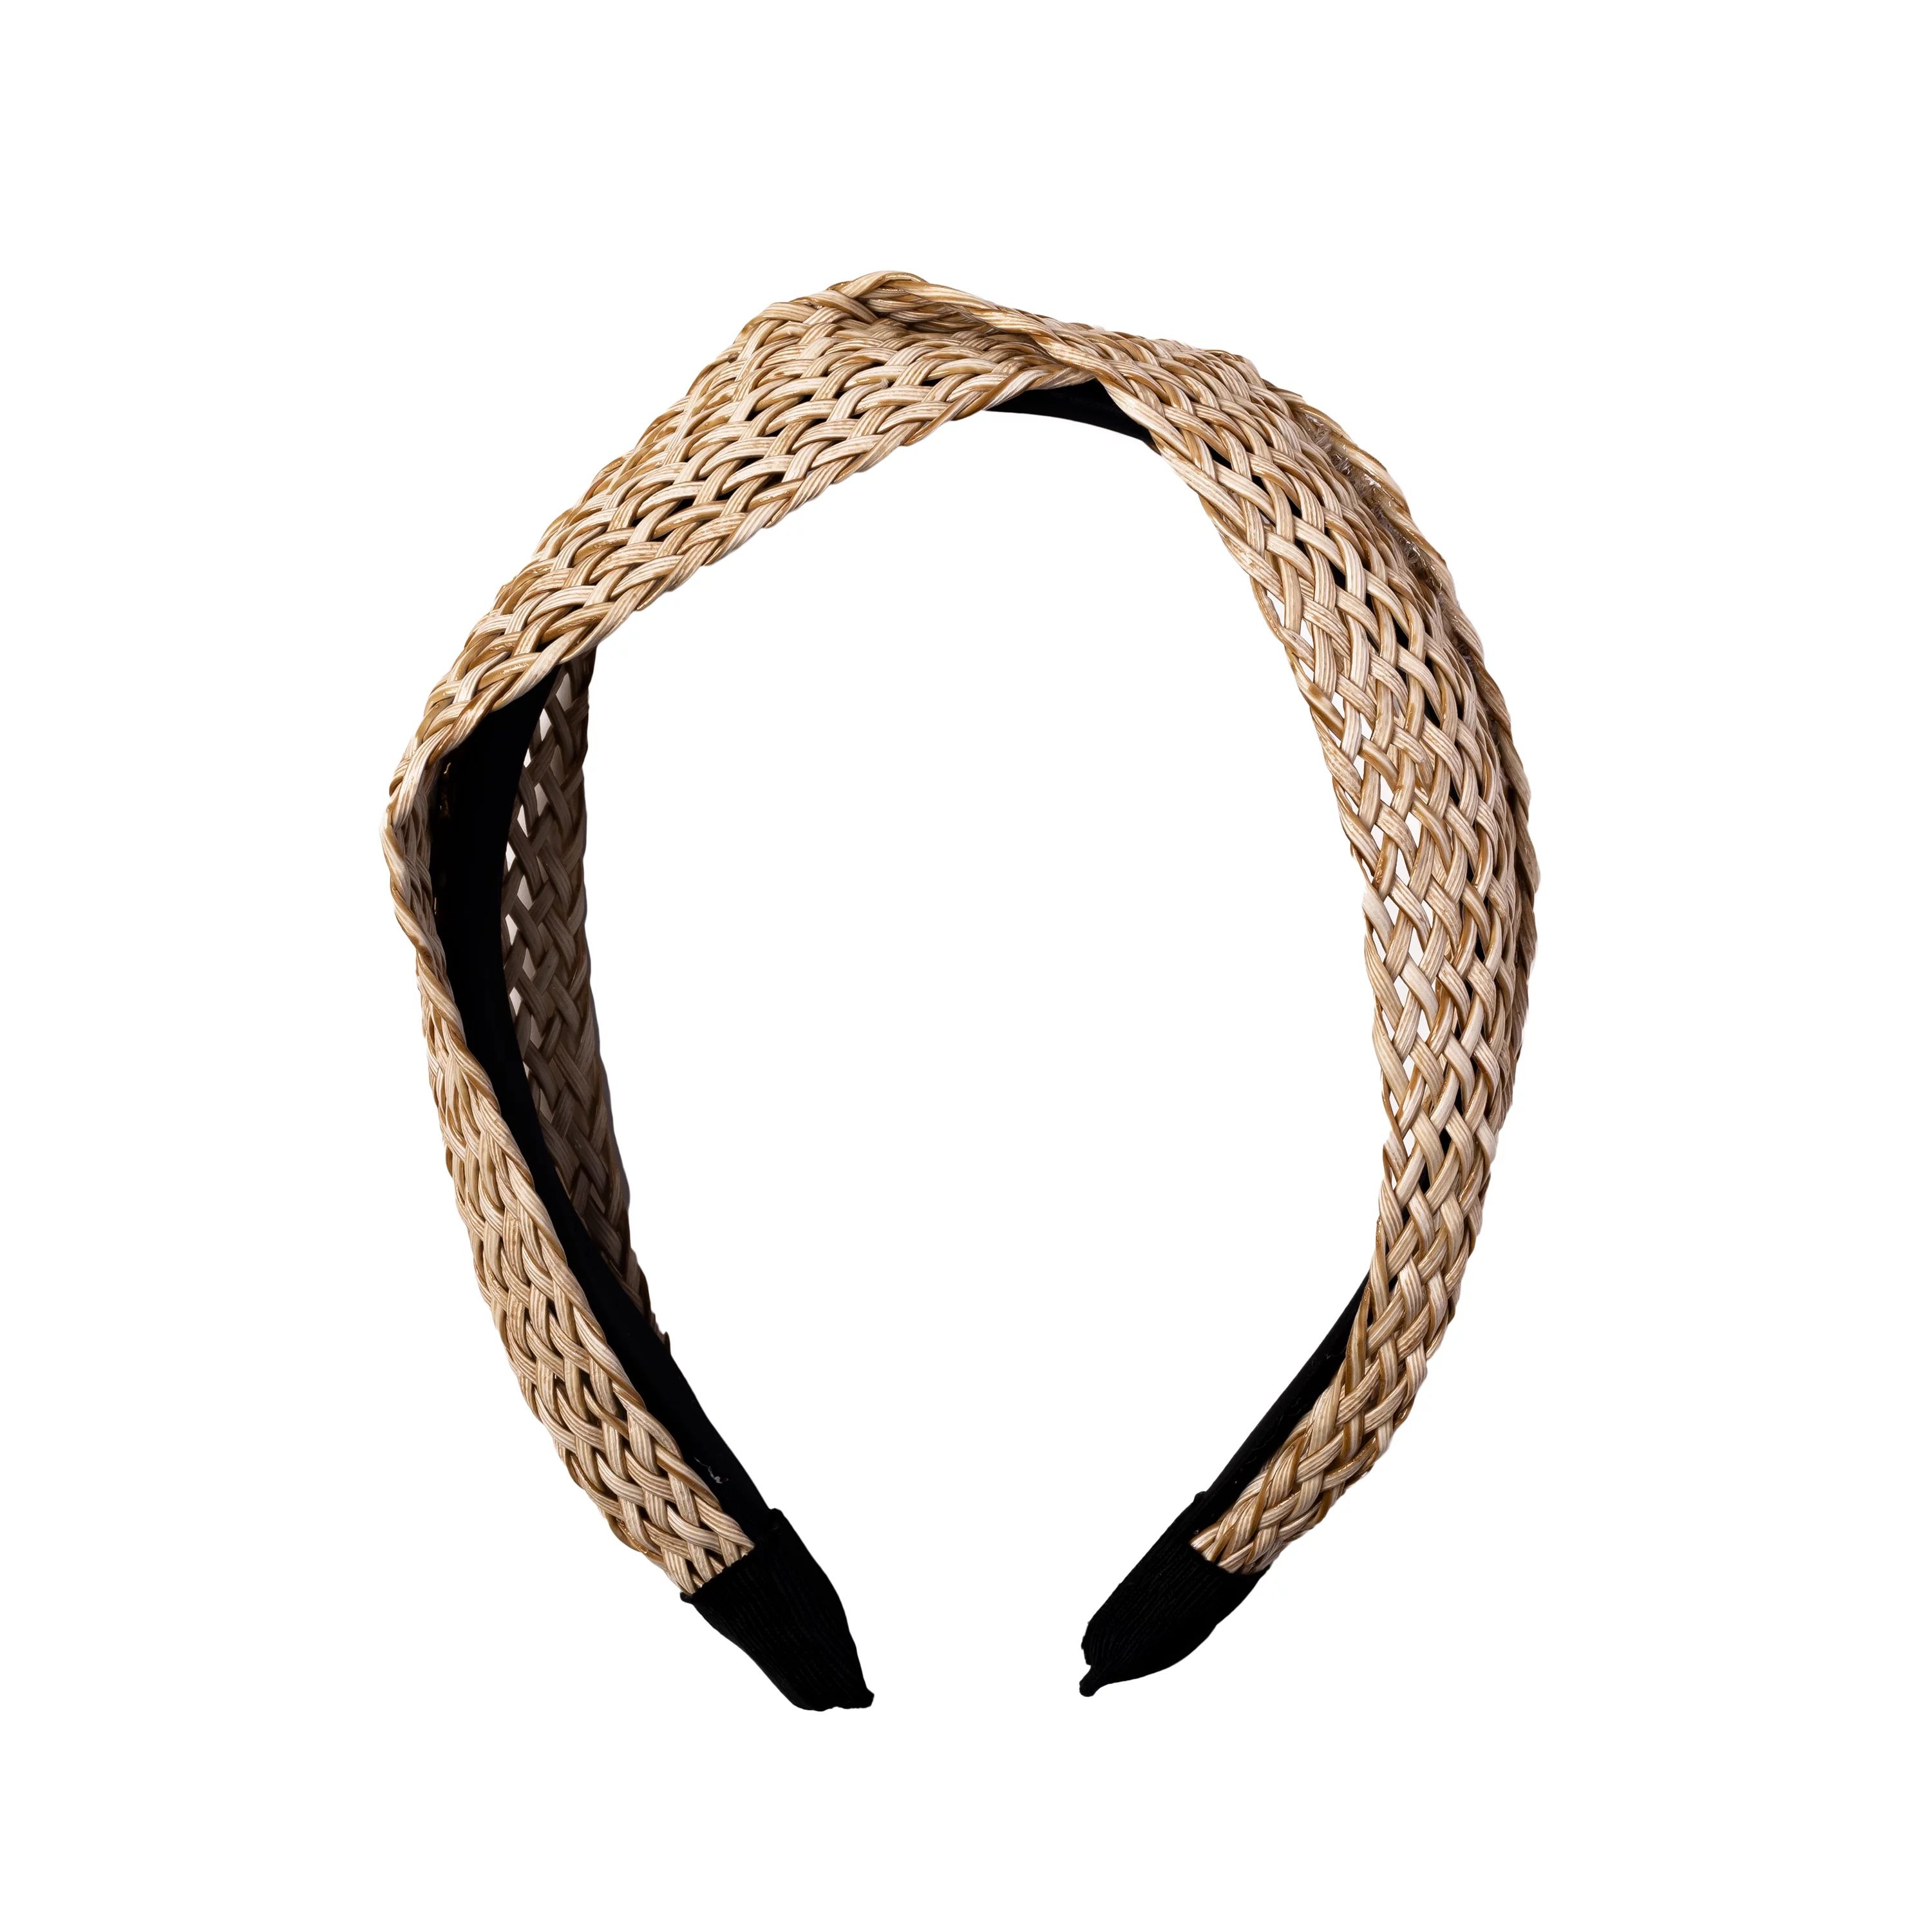 Hairitage Take Me to the Beach Raffia Headband for All Hair Types, Tan/Natural, 1PC | Walmart (US)